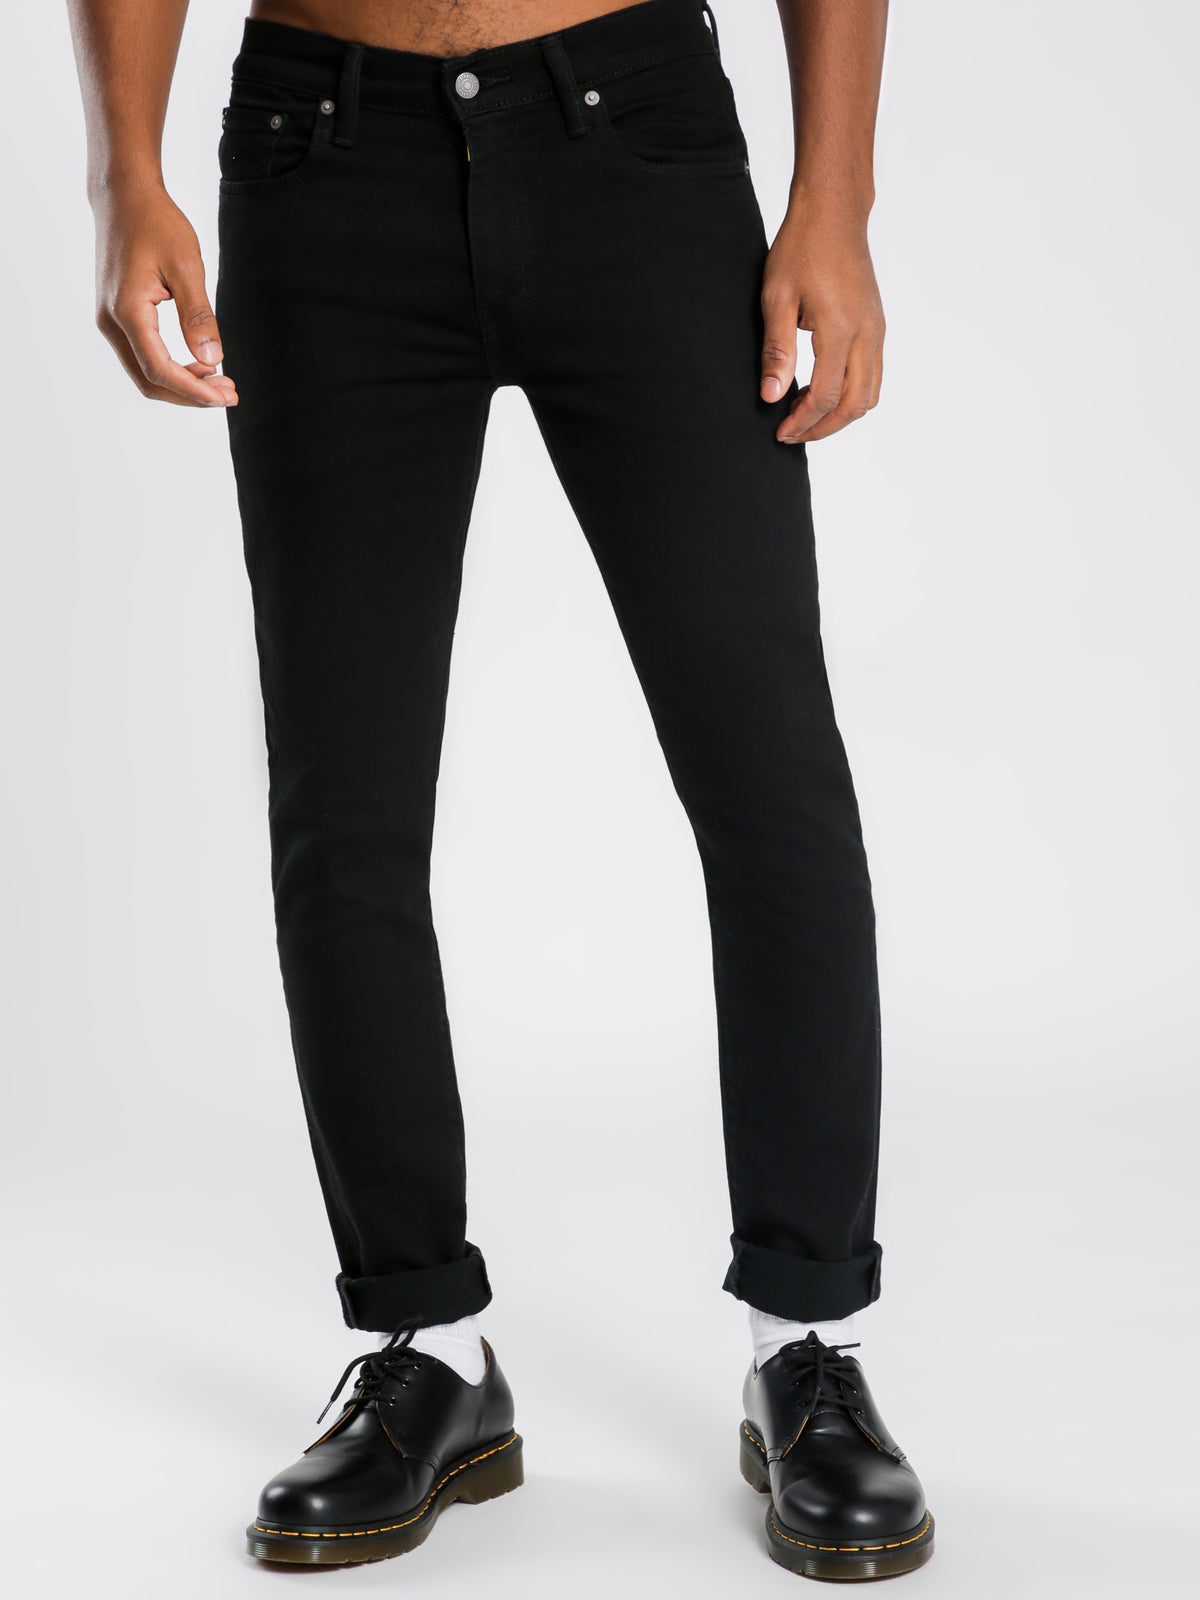 512 Slim Tapered Jeans in Nightshine Black Denim